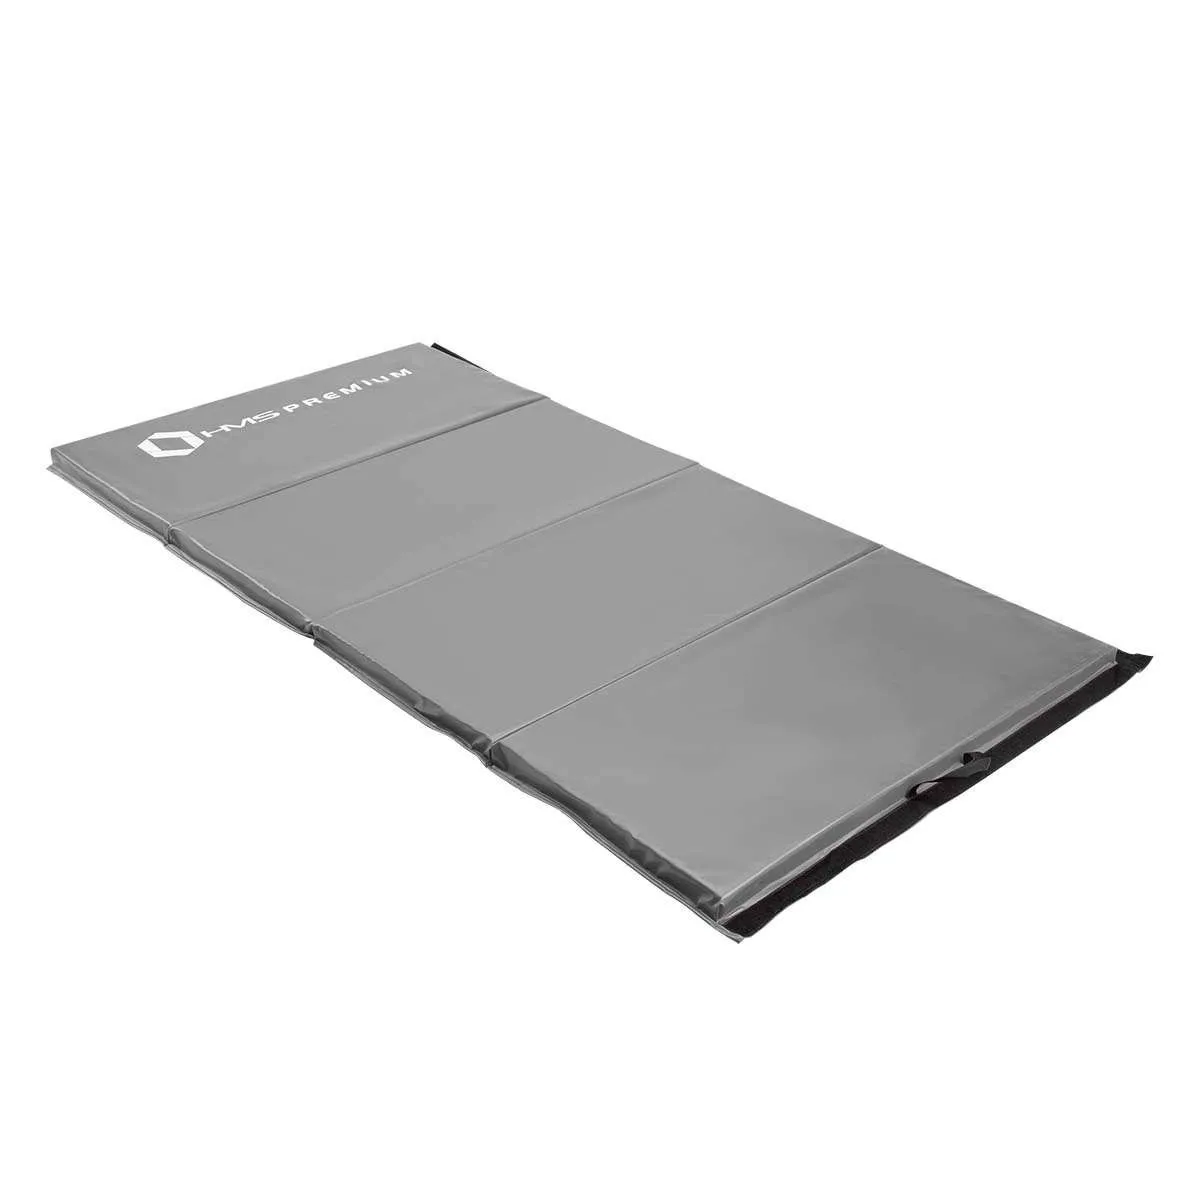 Foldable soft floor mat grey